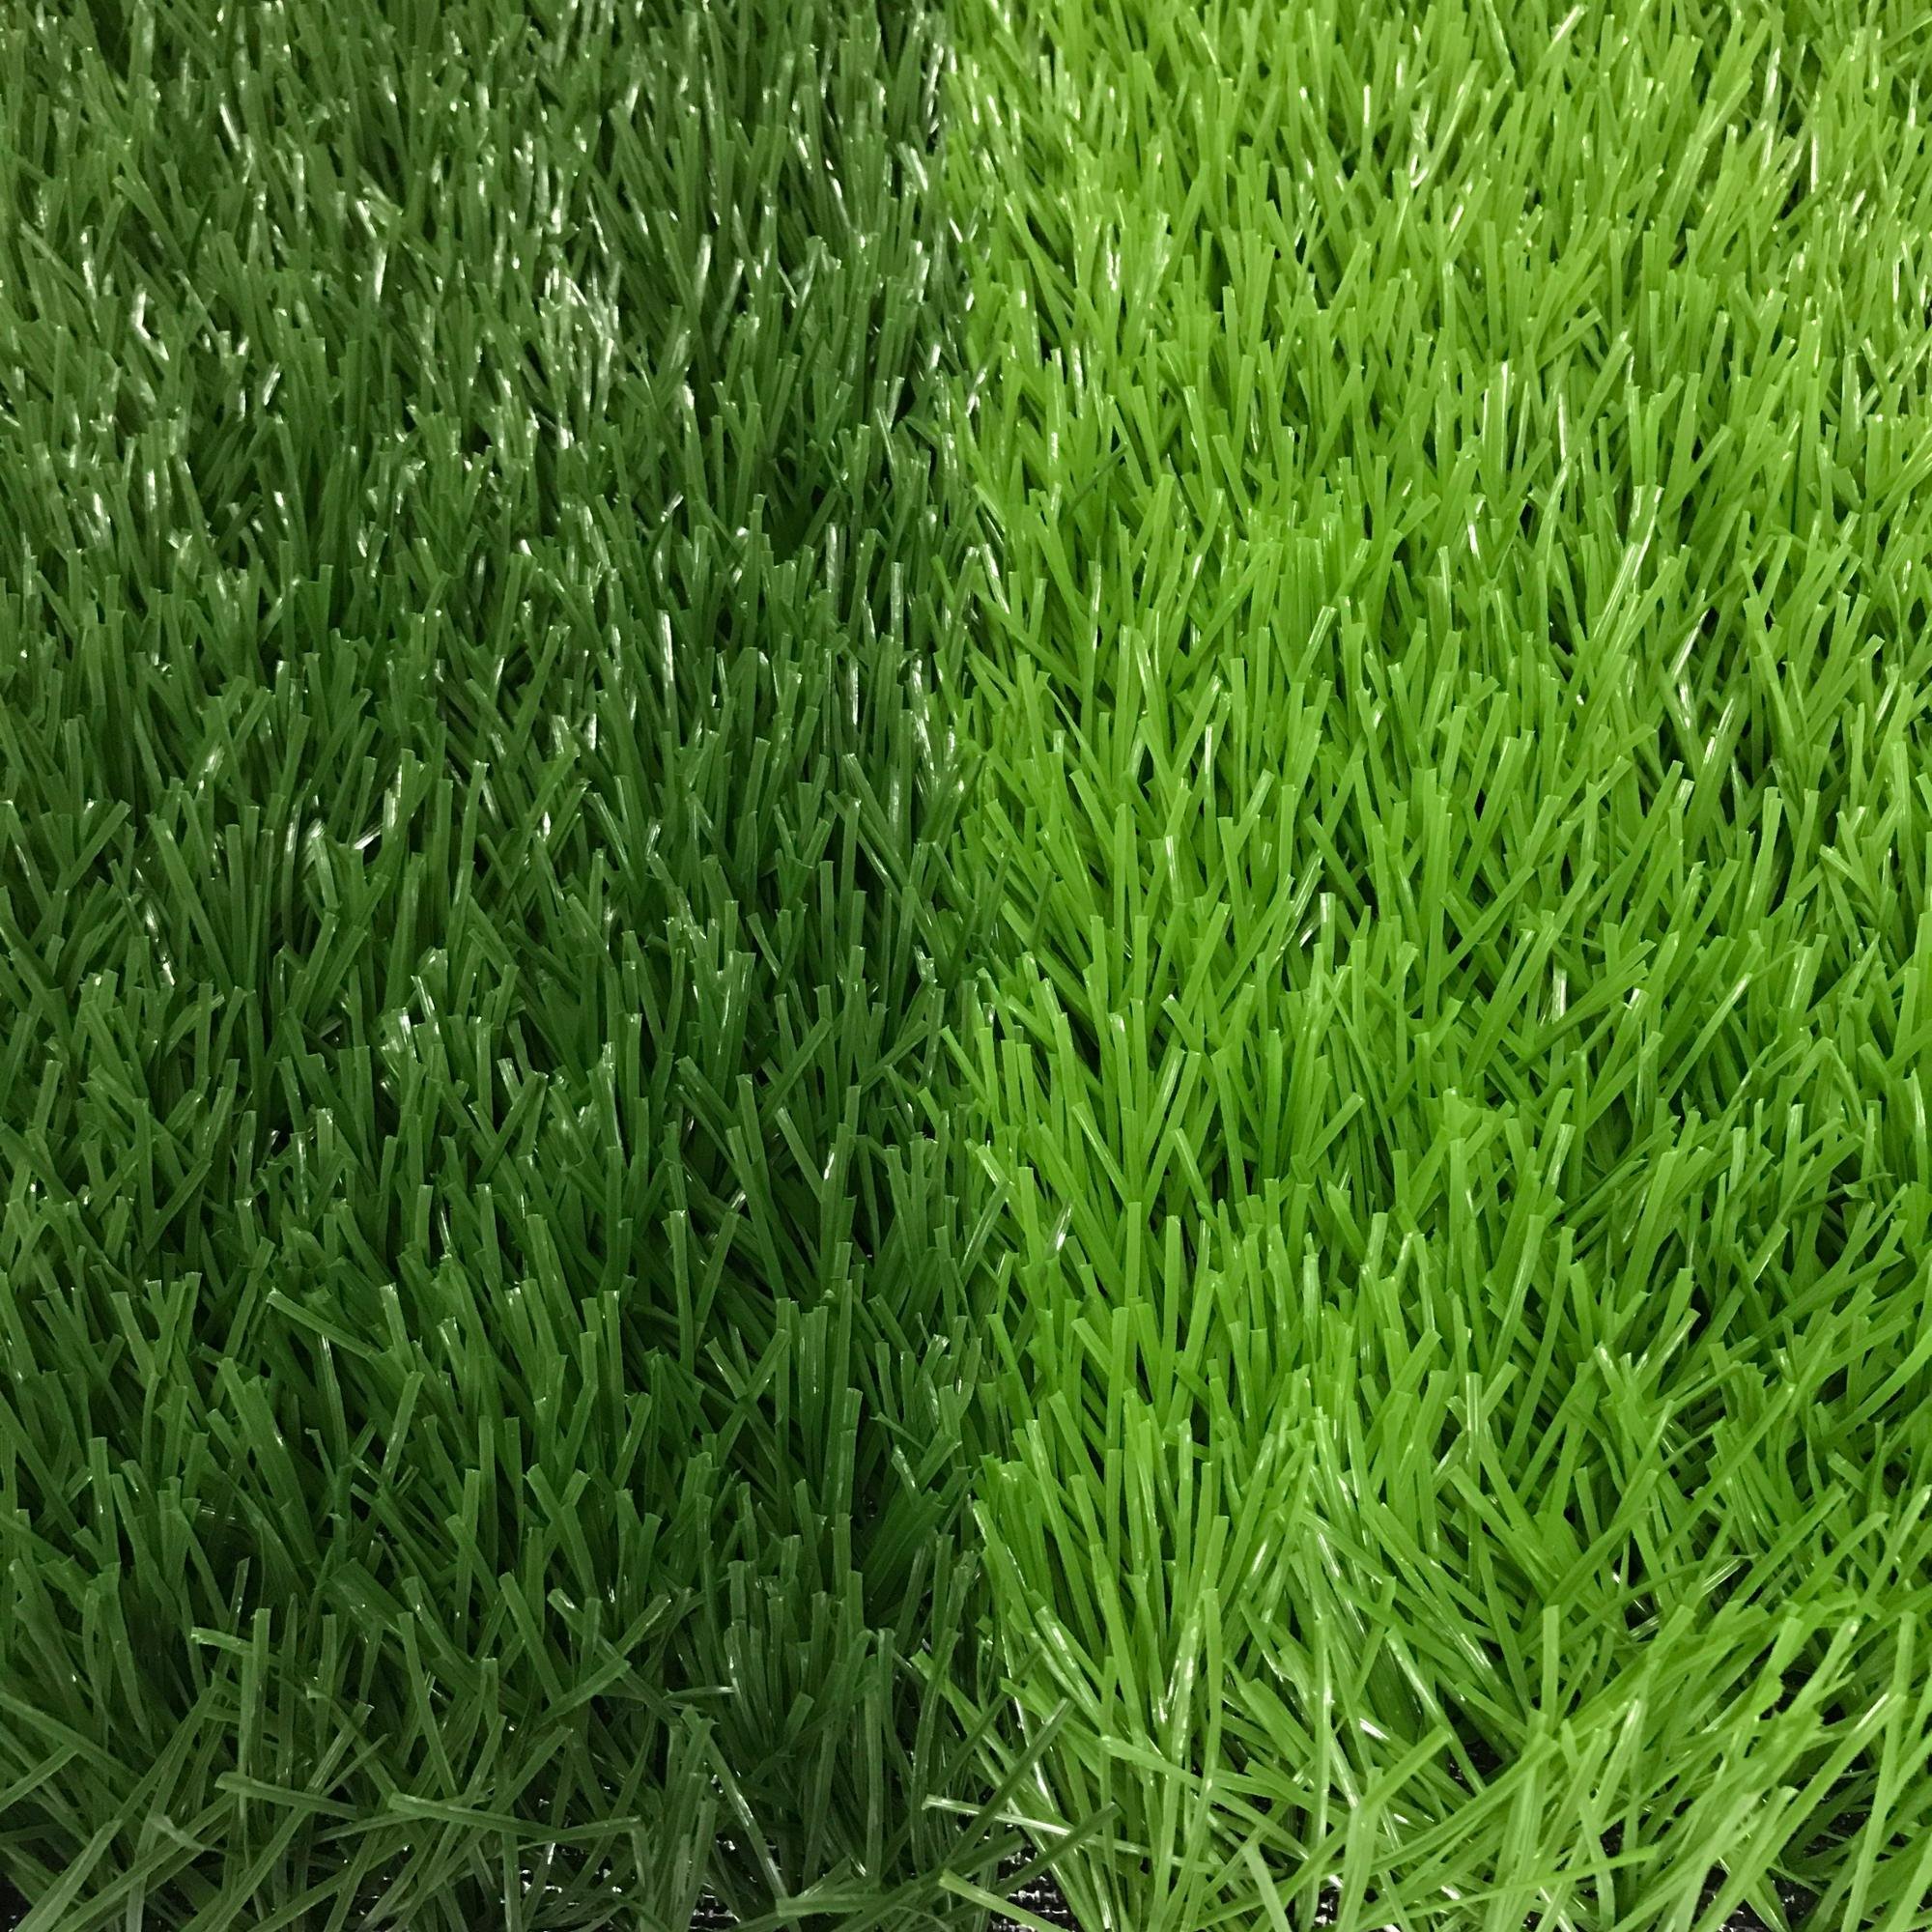 Grass price